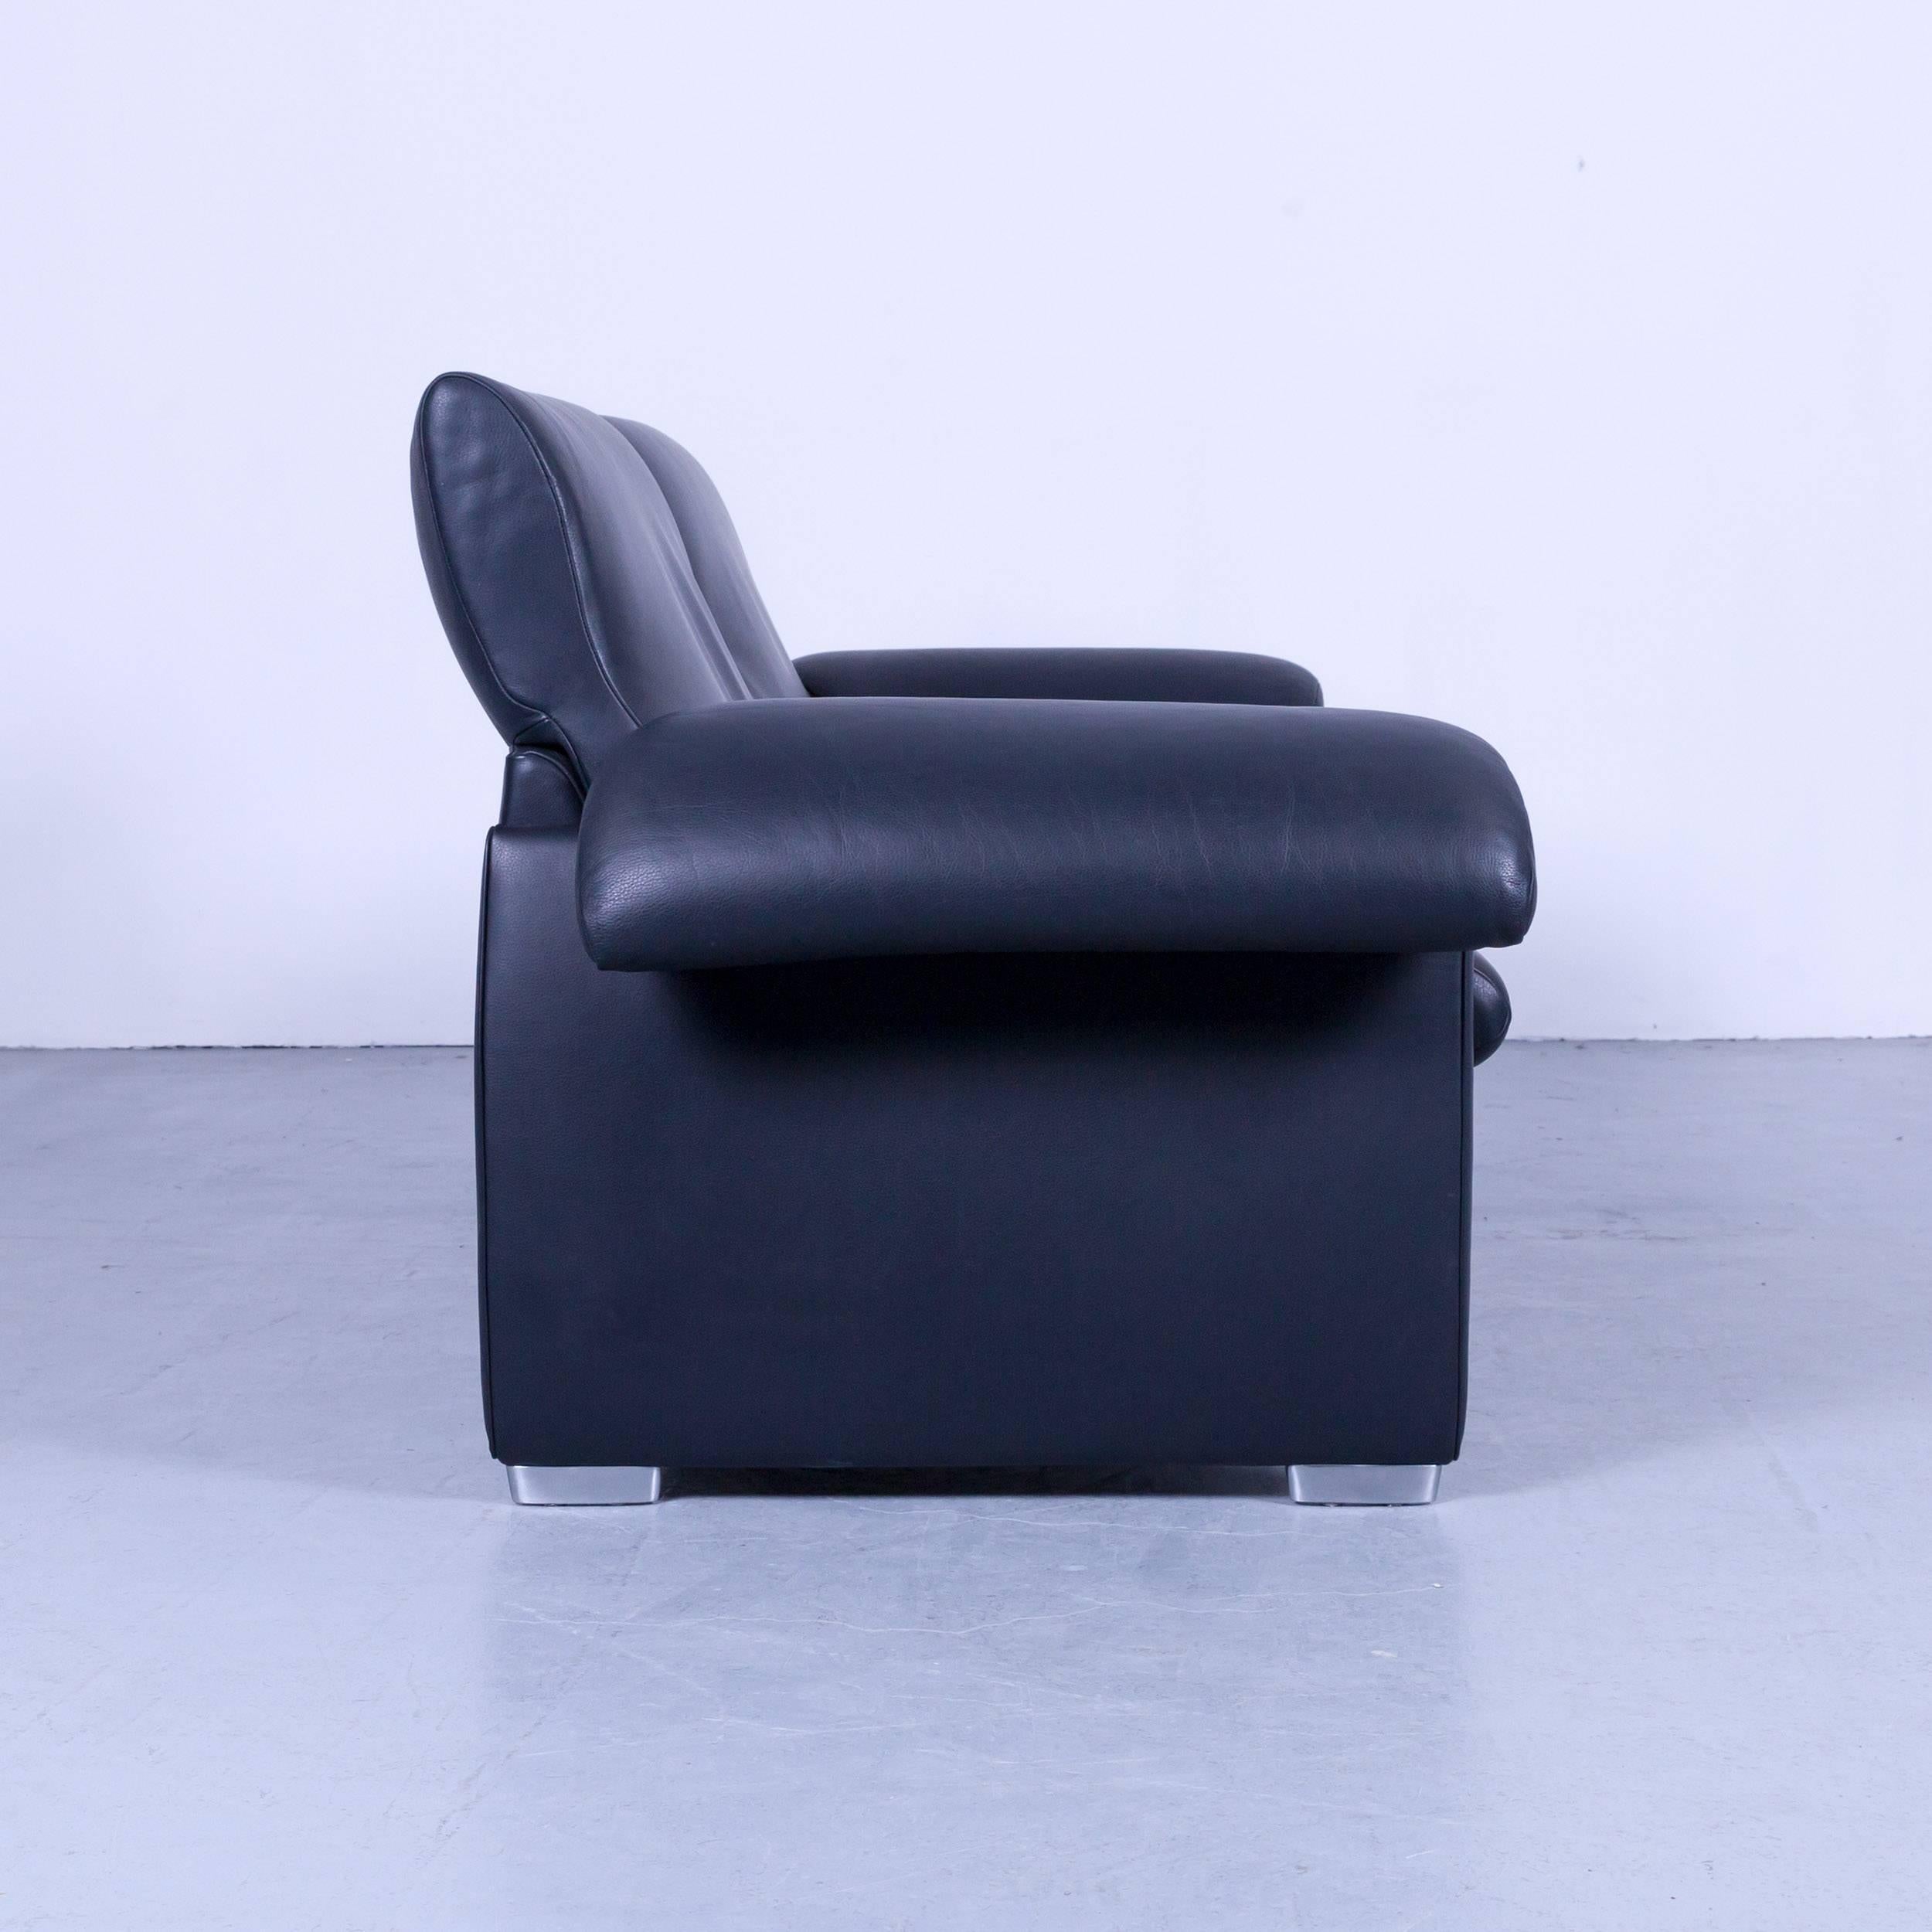 Contemporary De Sede DS 10 Designer Sofa Navy Blue Leather Three-Seat Couch Switzerland